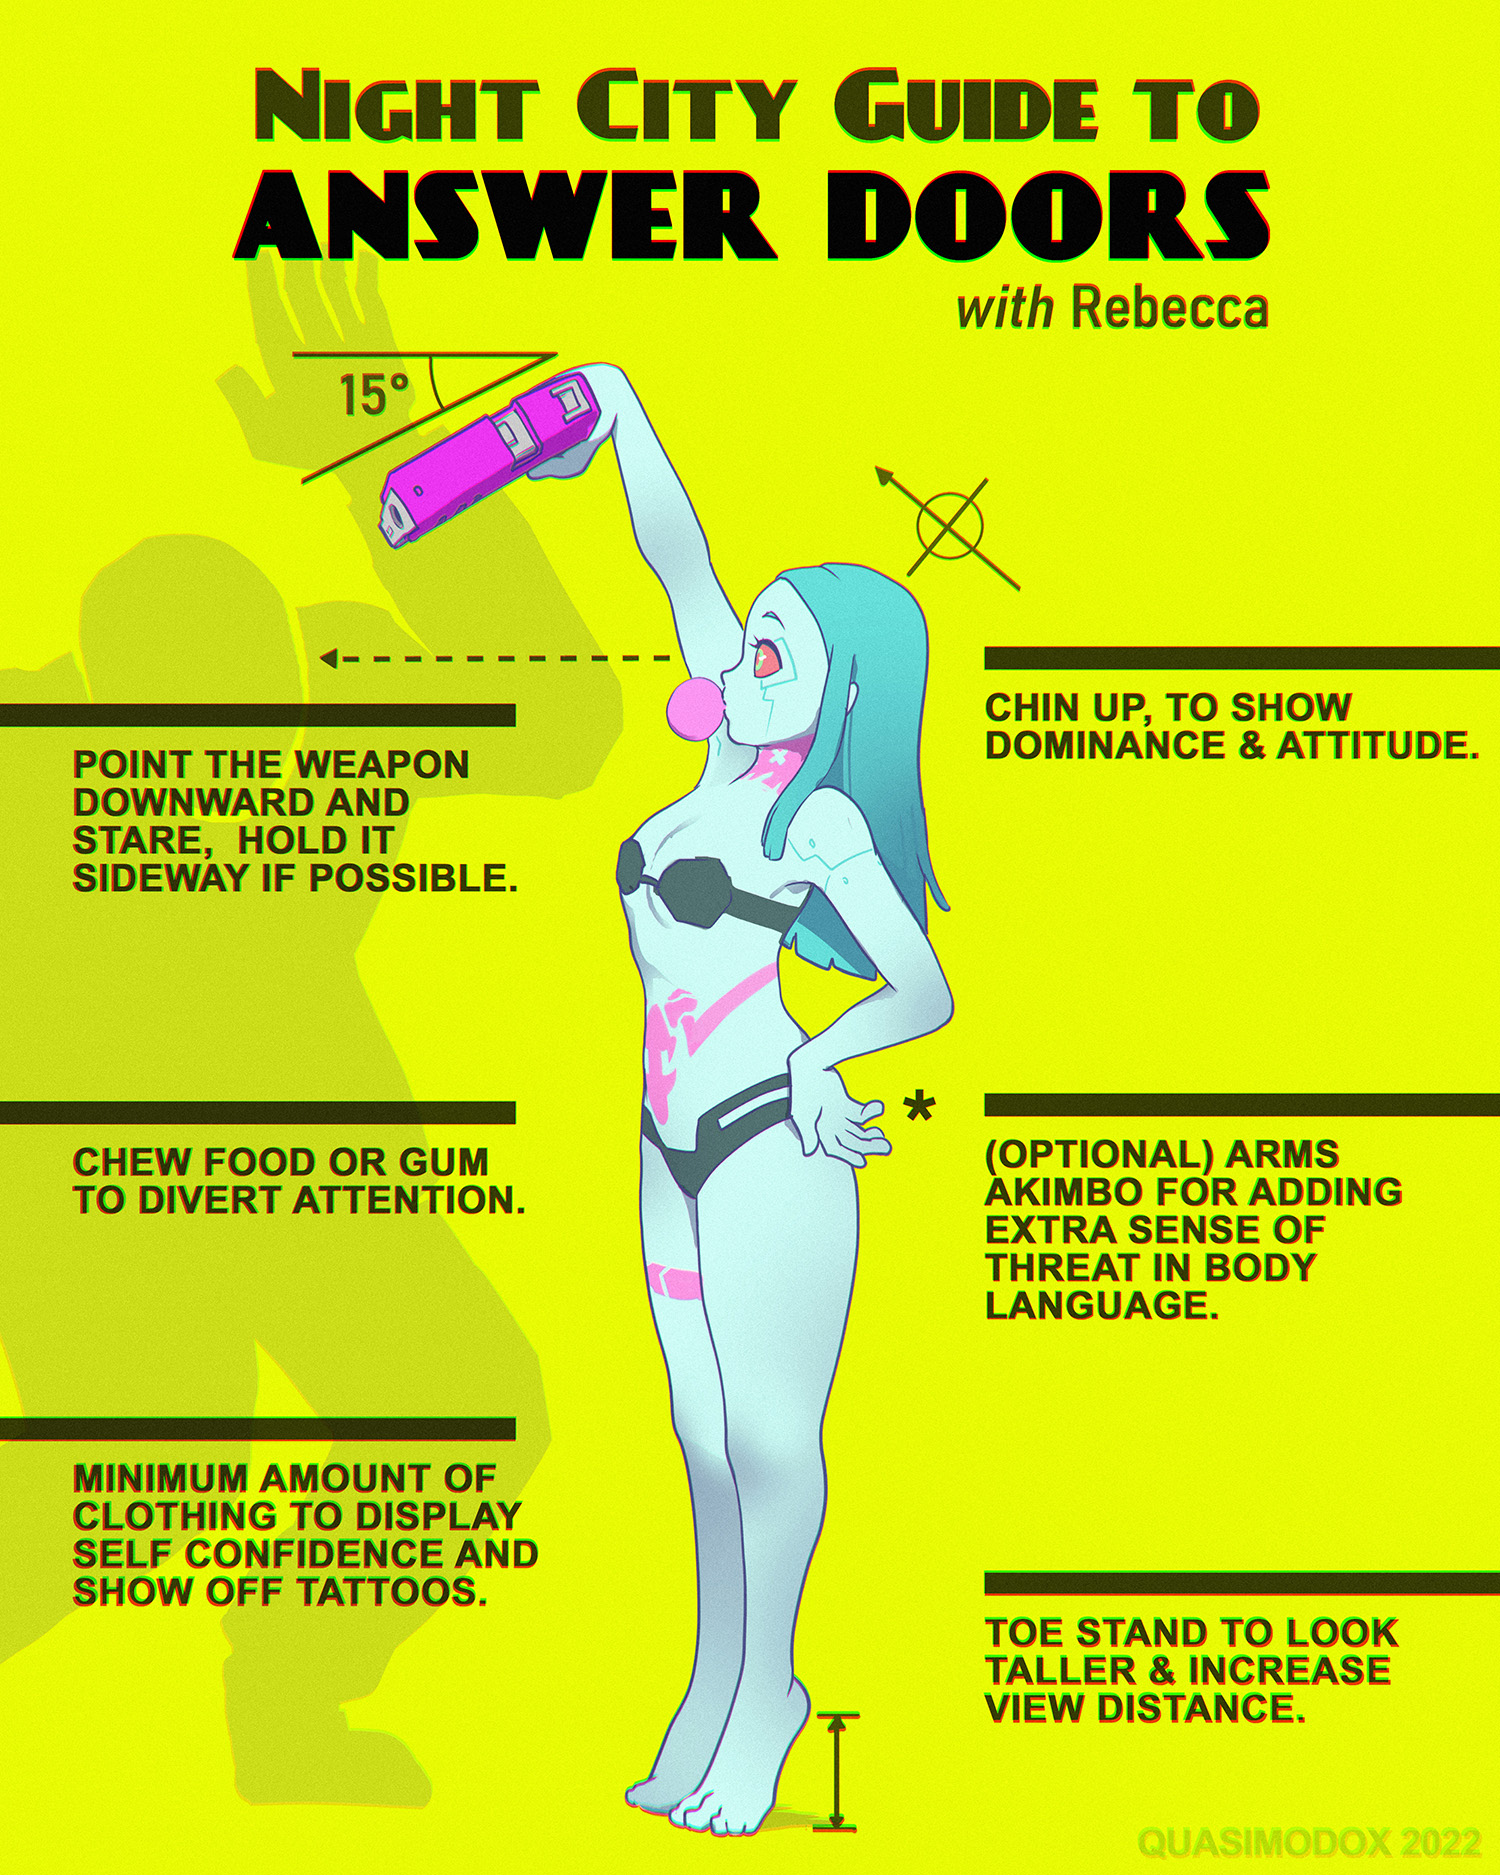 Shaun On Twitter Rt Quasimodox The Cyberpunk Guide To Answer Doors 